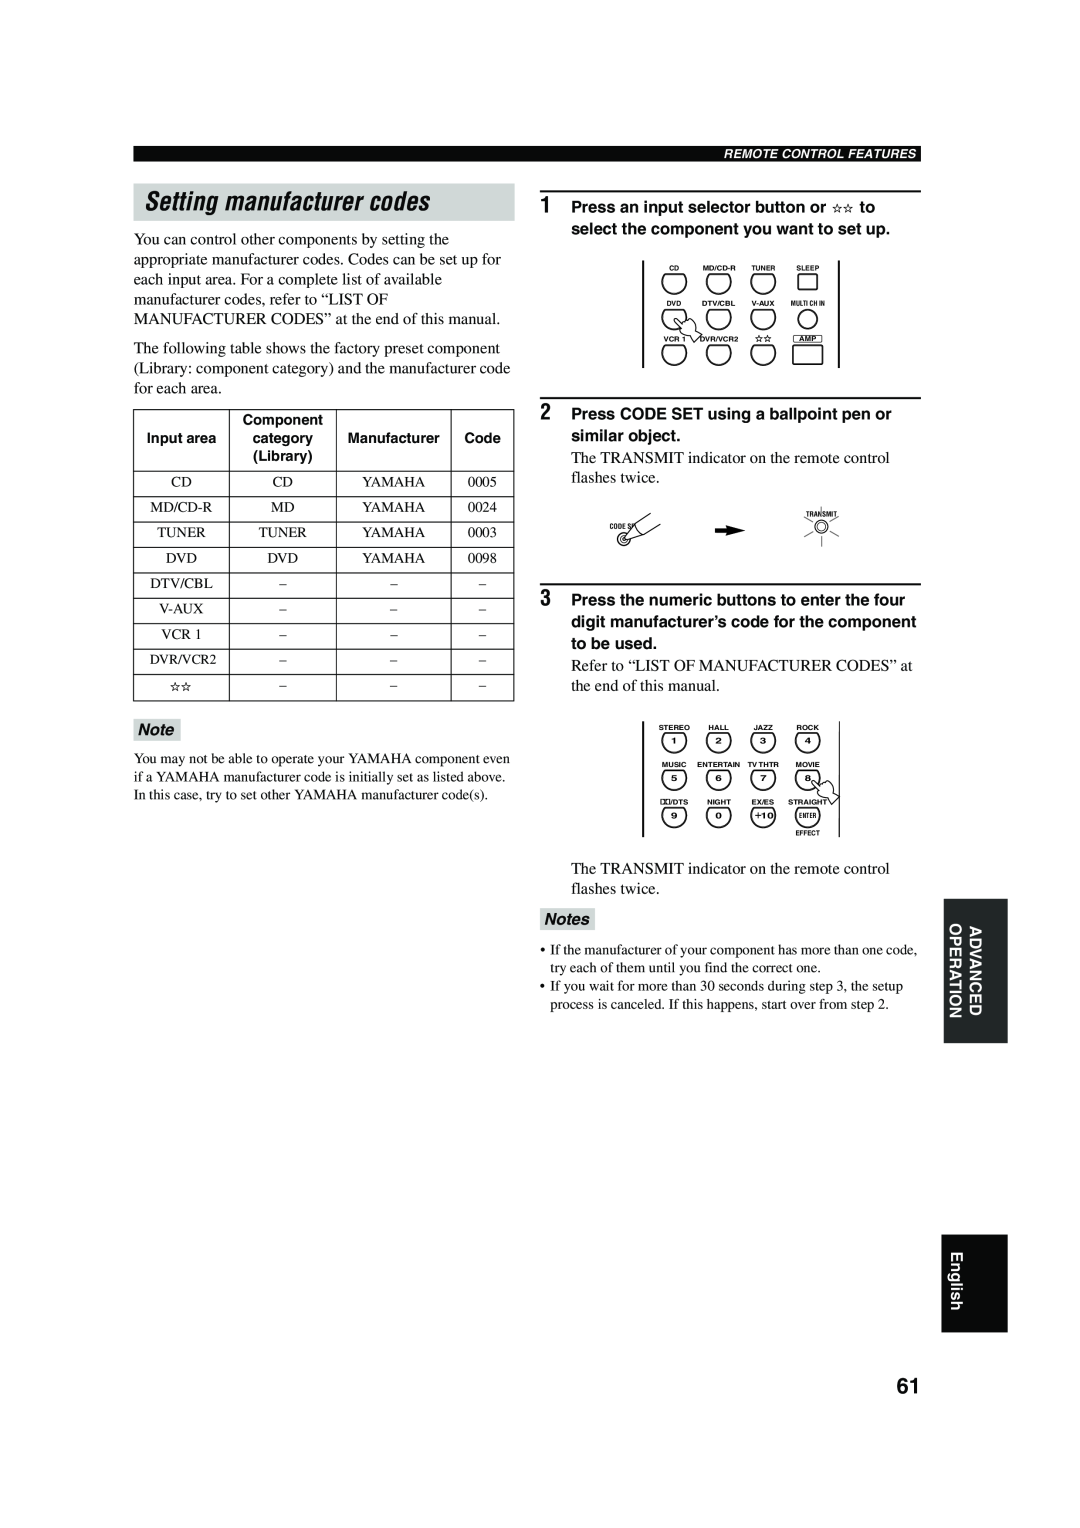 Yamaha HTR-5760 owner manual Setting manufacturer codes, Component, Code 